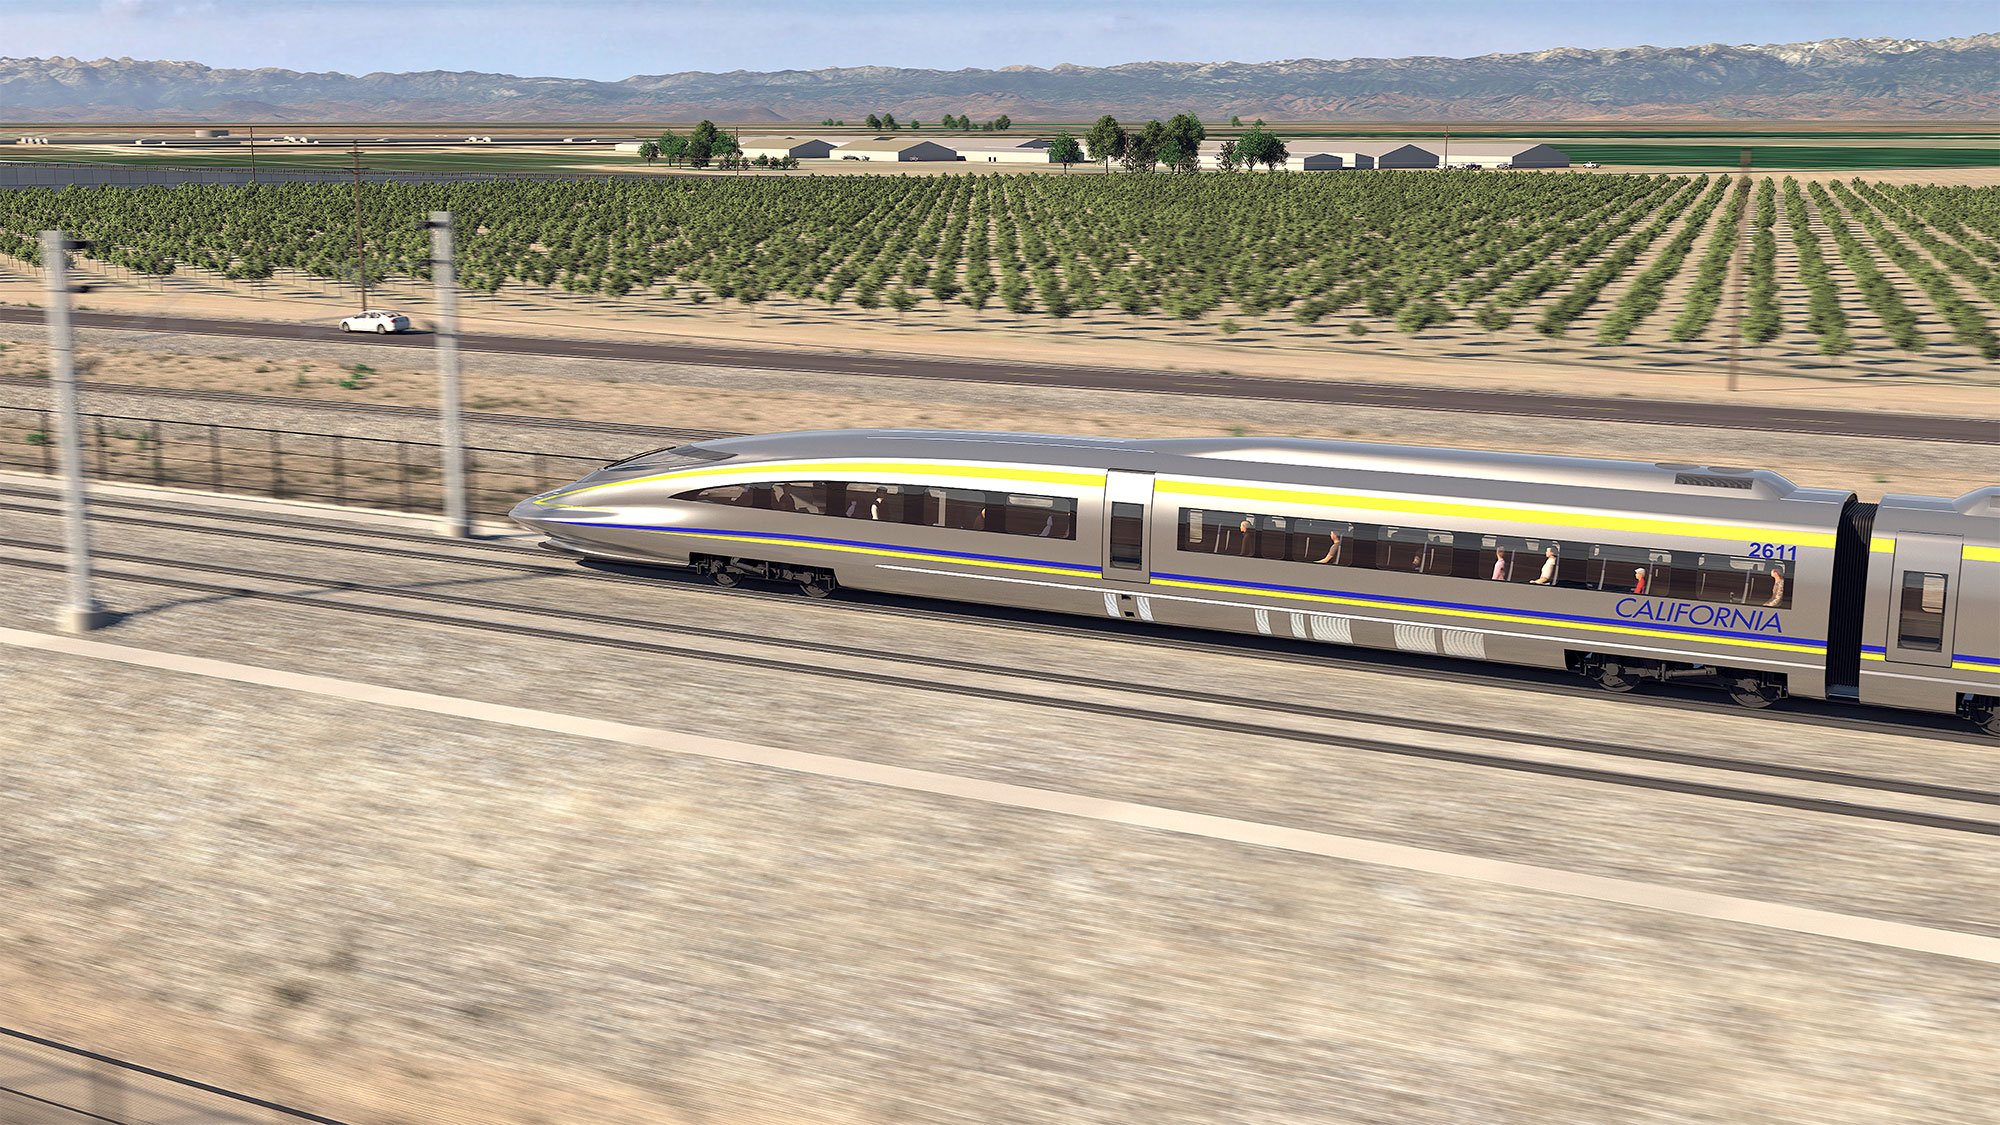 Rendering of high-speed train in California